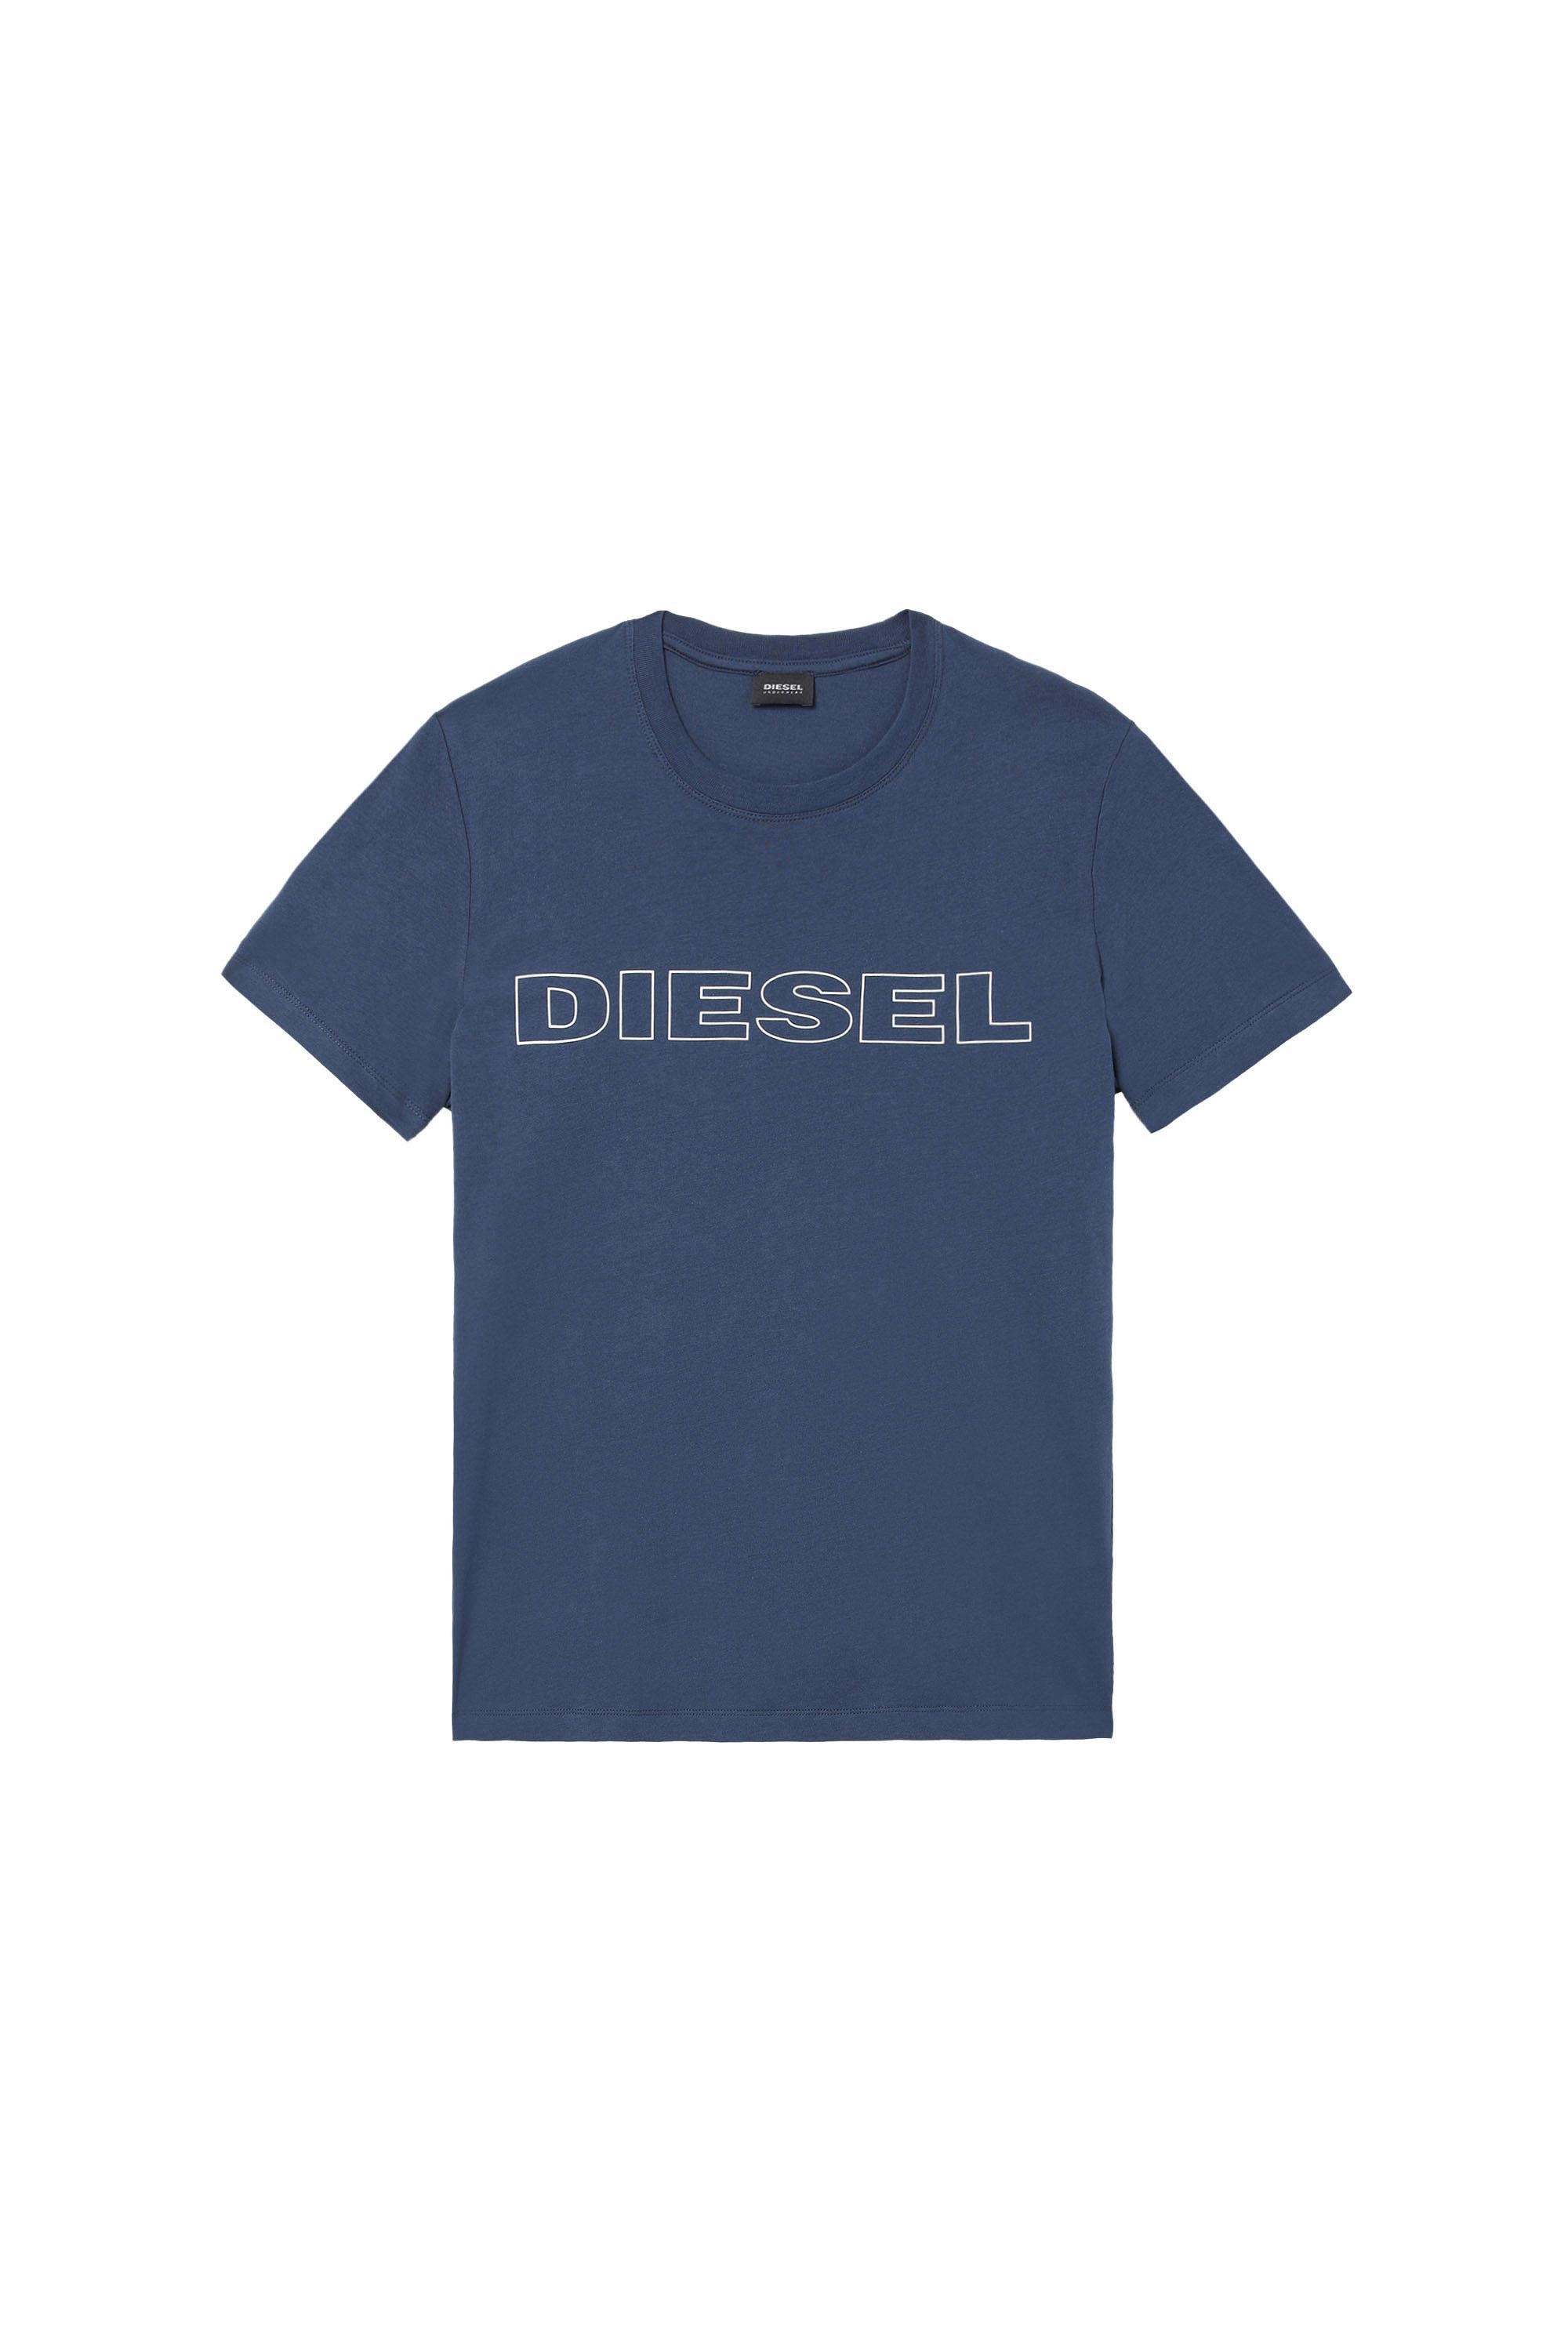 Diesel - UMLT-JAKE,  - Image 1